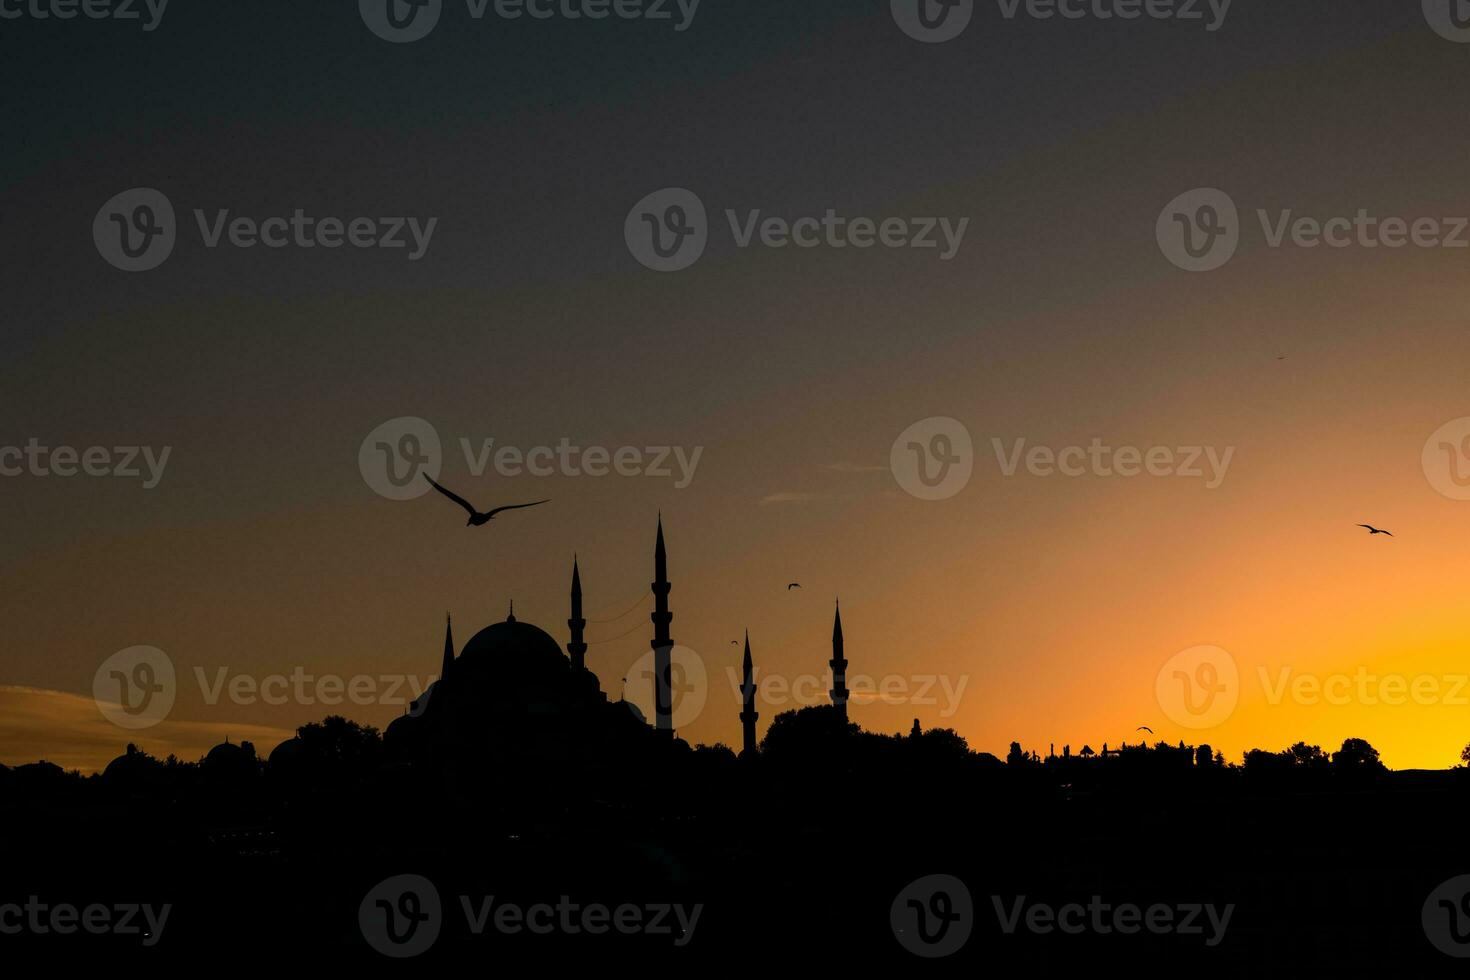 suleymaniye mezquita y Gaviota a puesta de sol. Ramadán o islámico foto